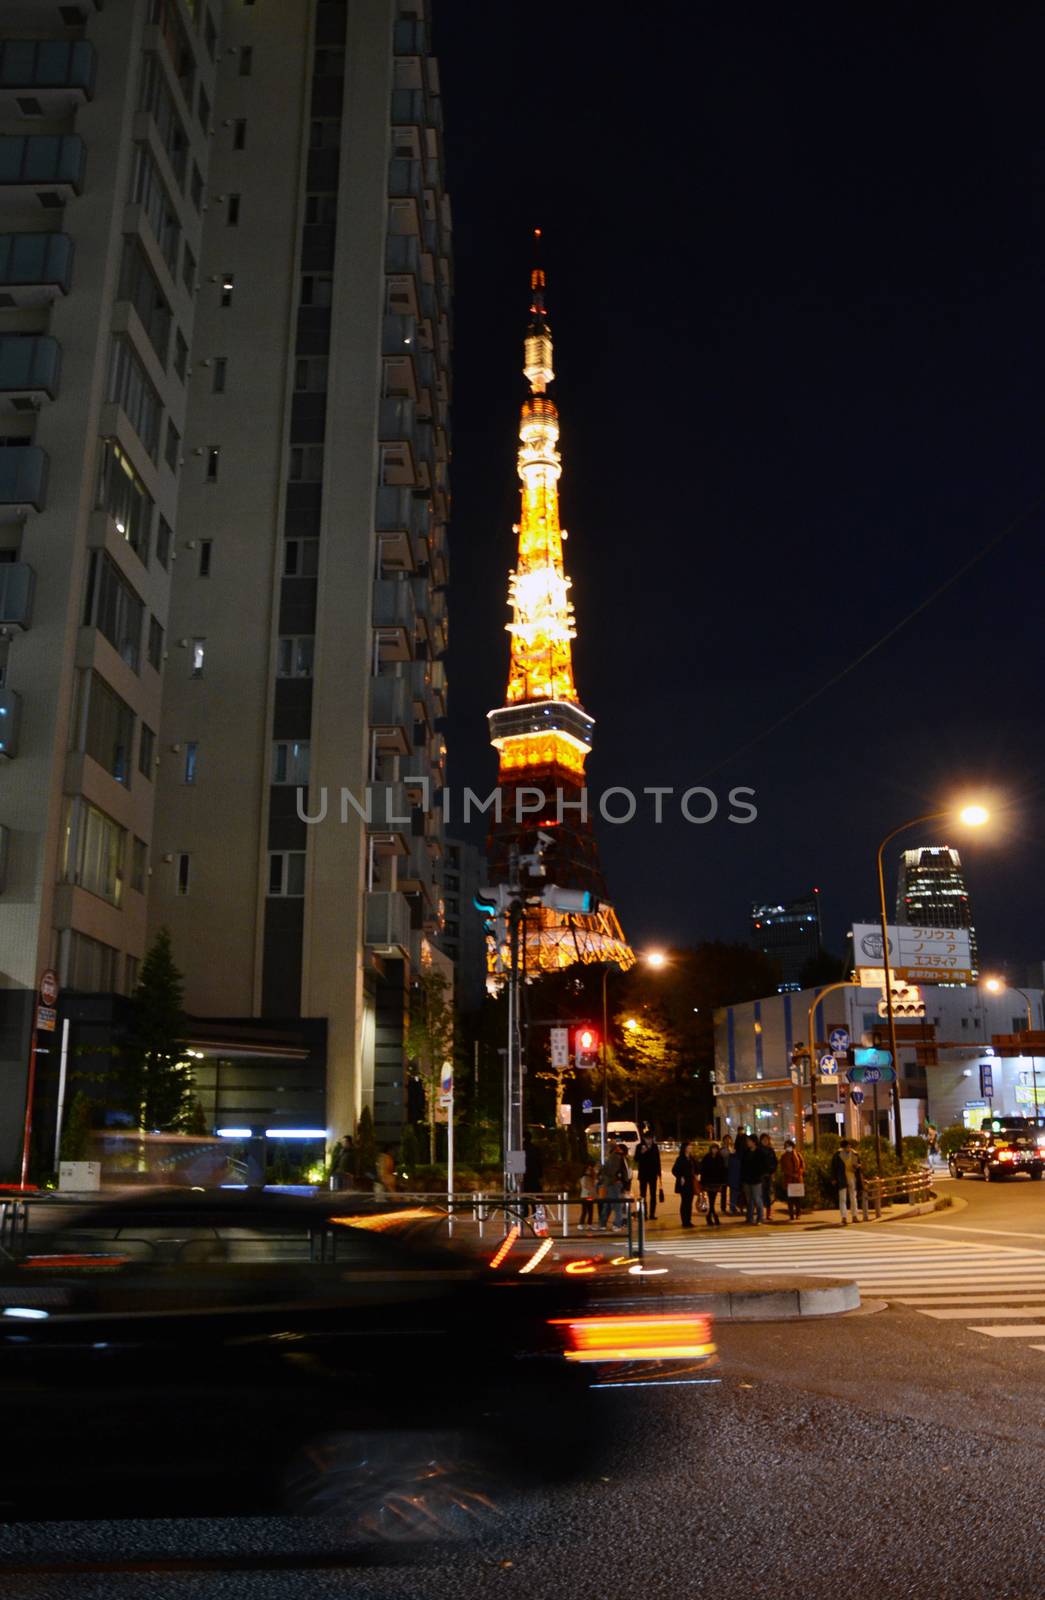 Tokyo, Japan - November 28, 2013: View of busy street at night with Tokyo Tower by siraanamwong